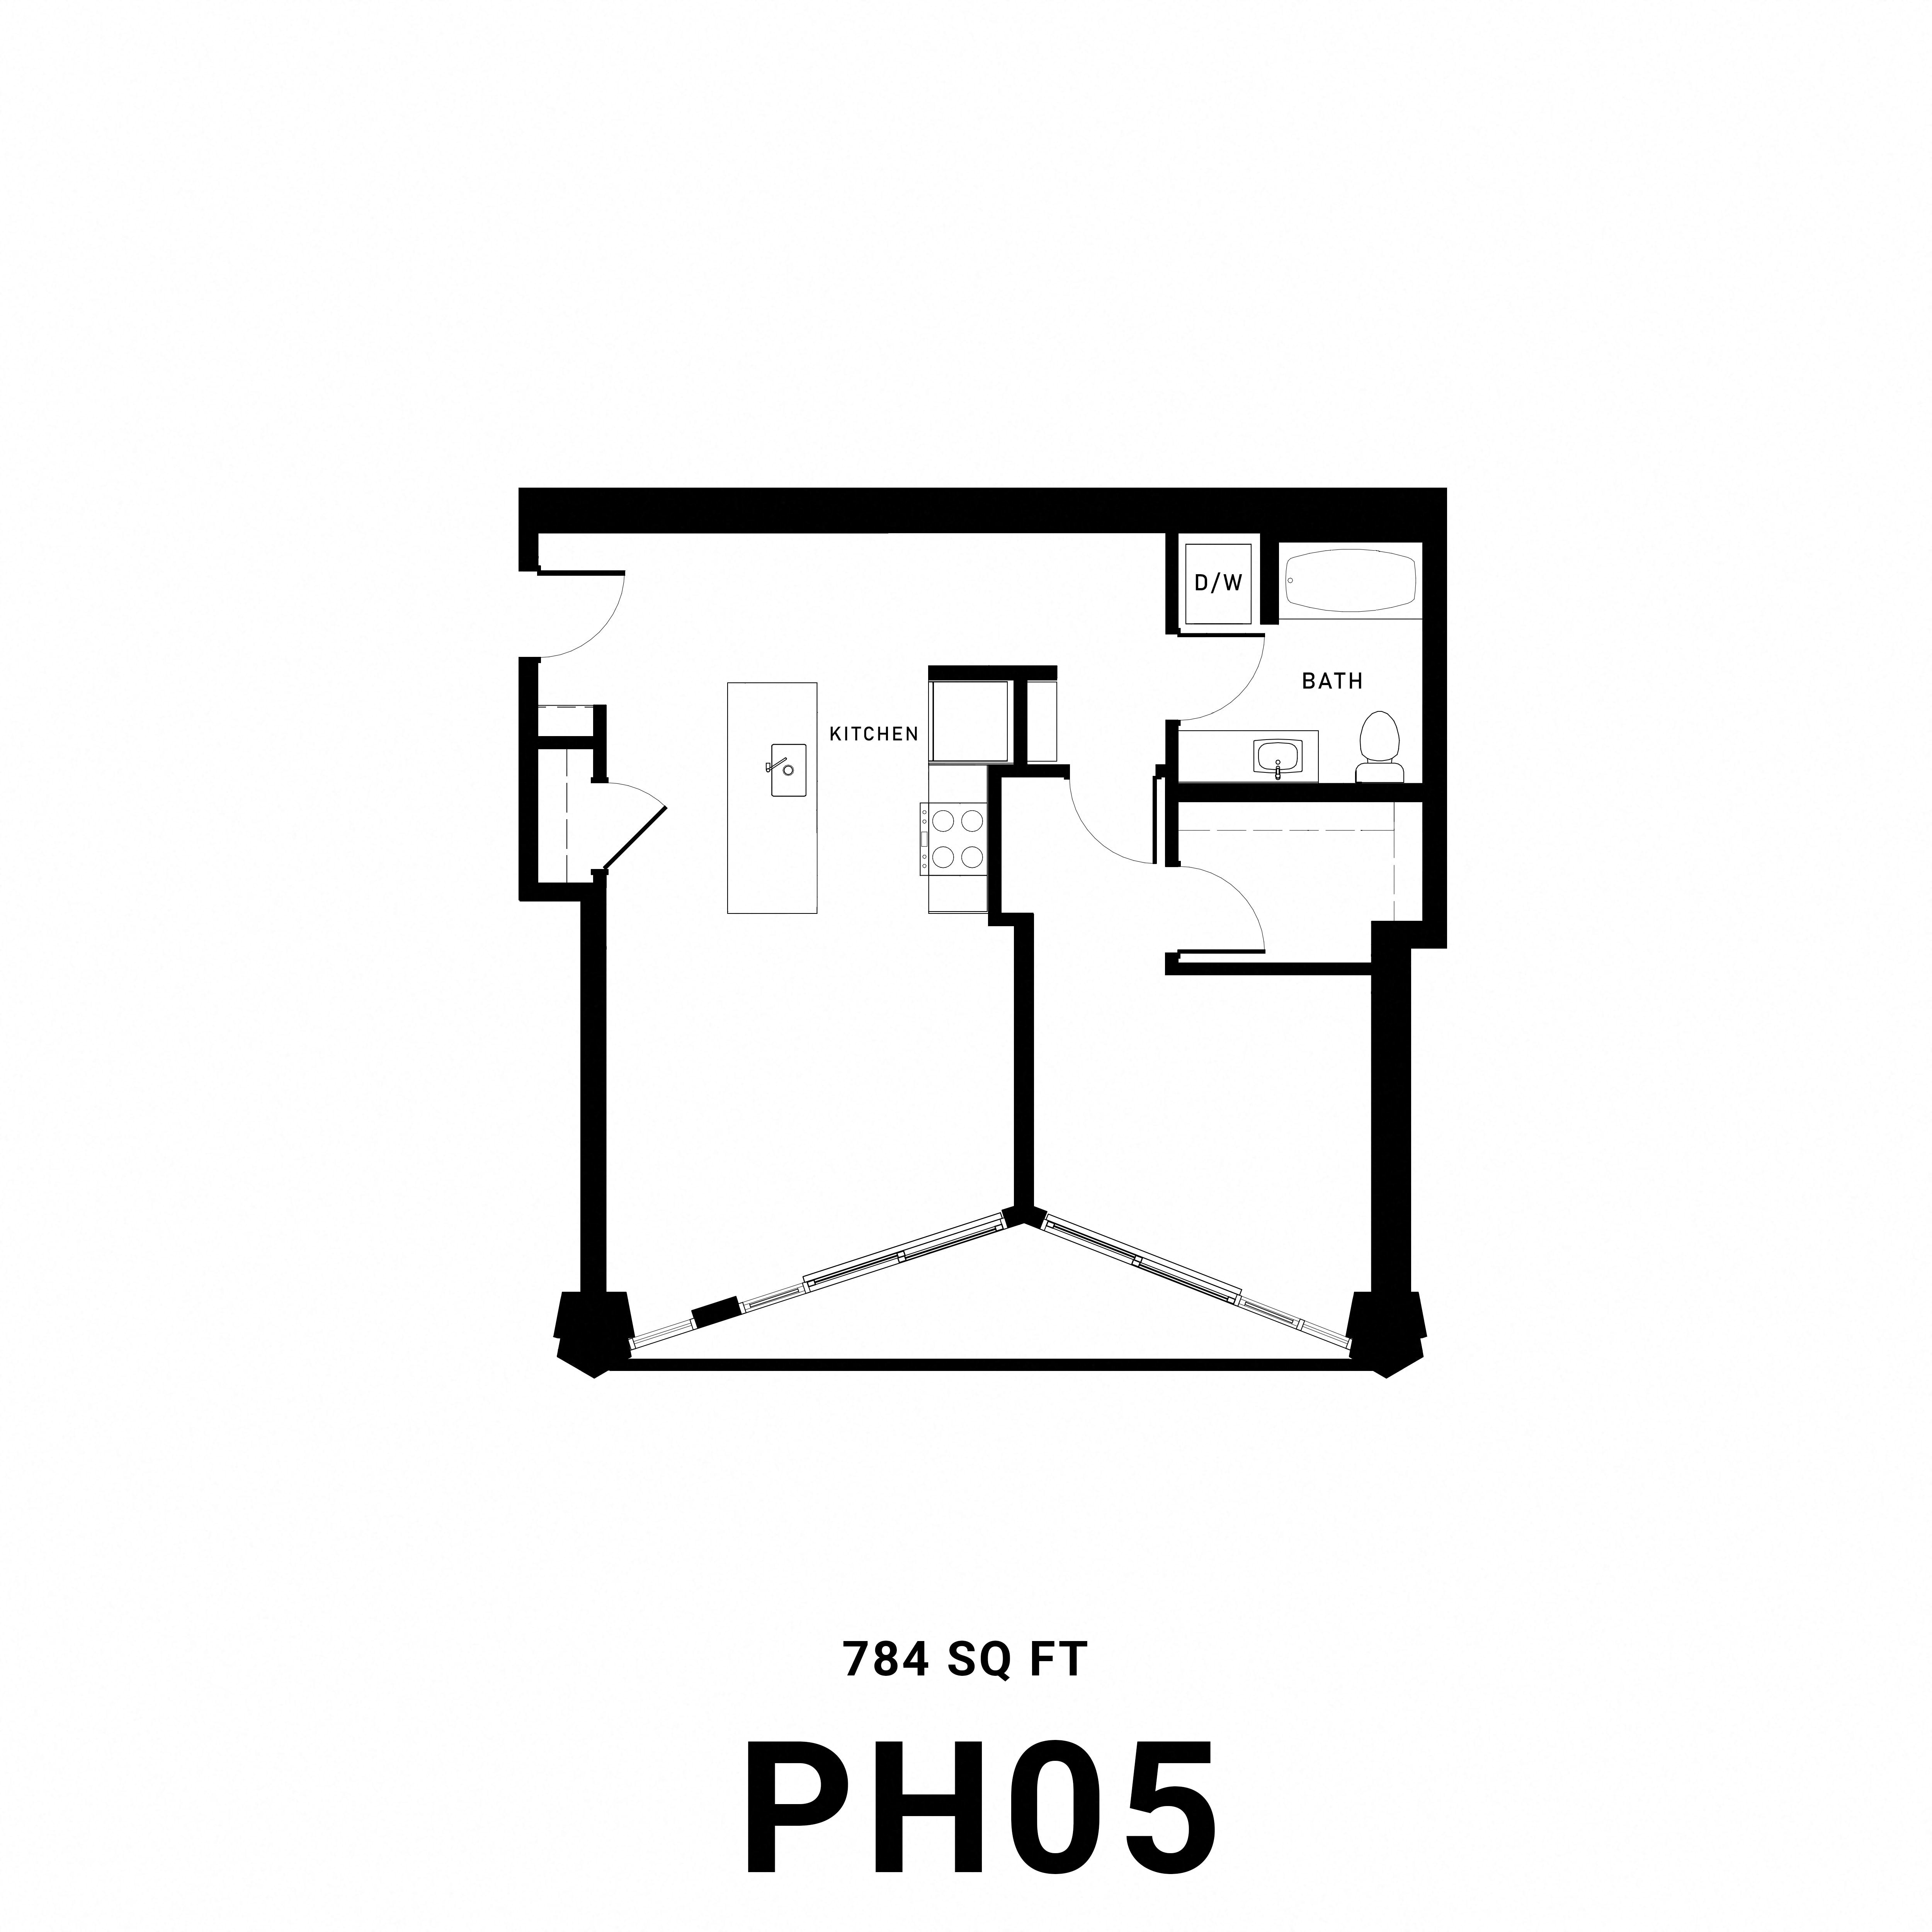 Floorplan PH05